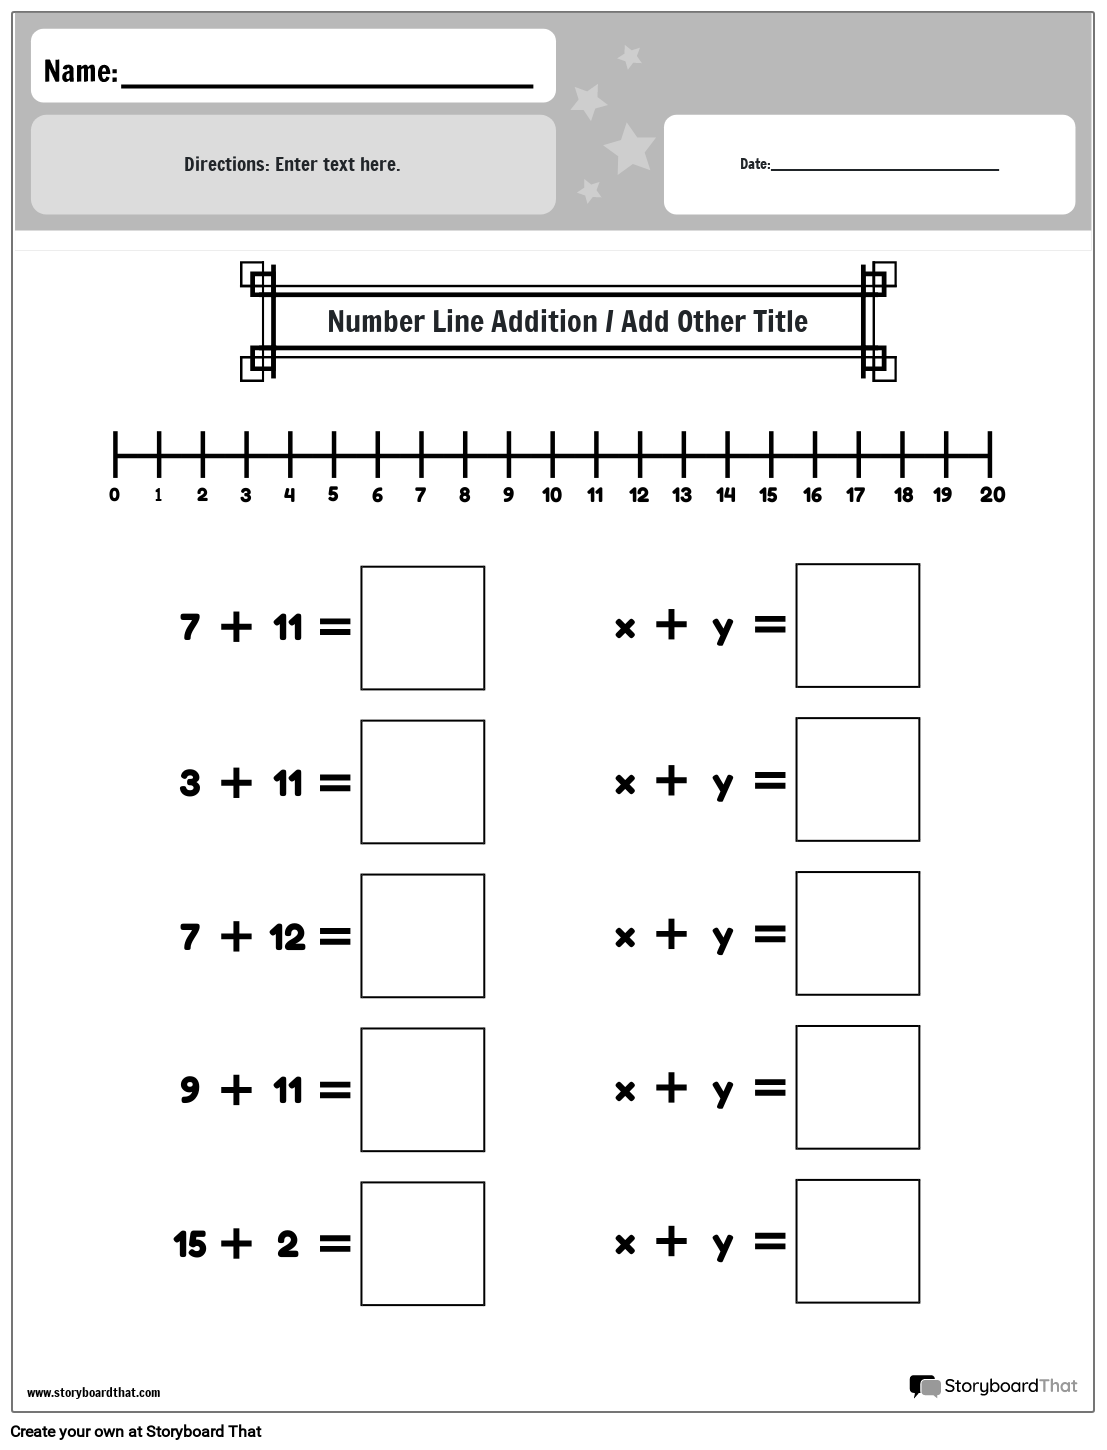 Numbers line addition worksheet (black & white)